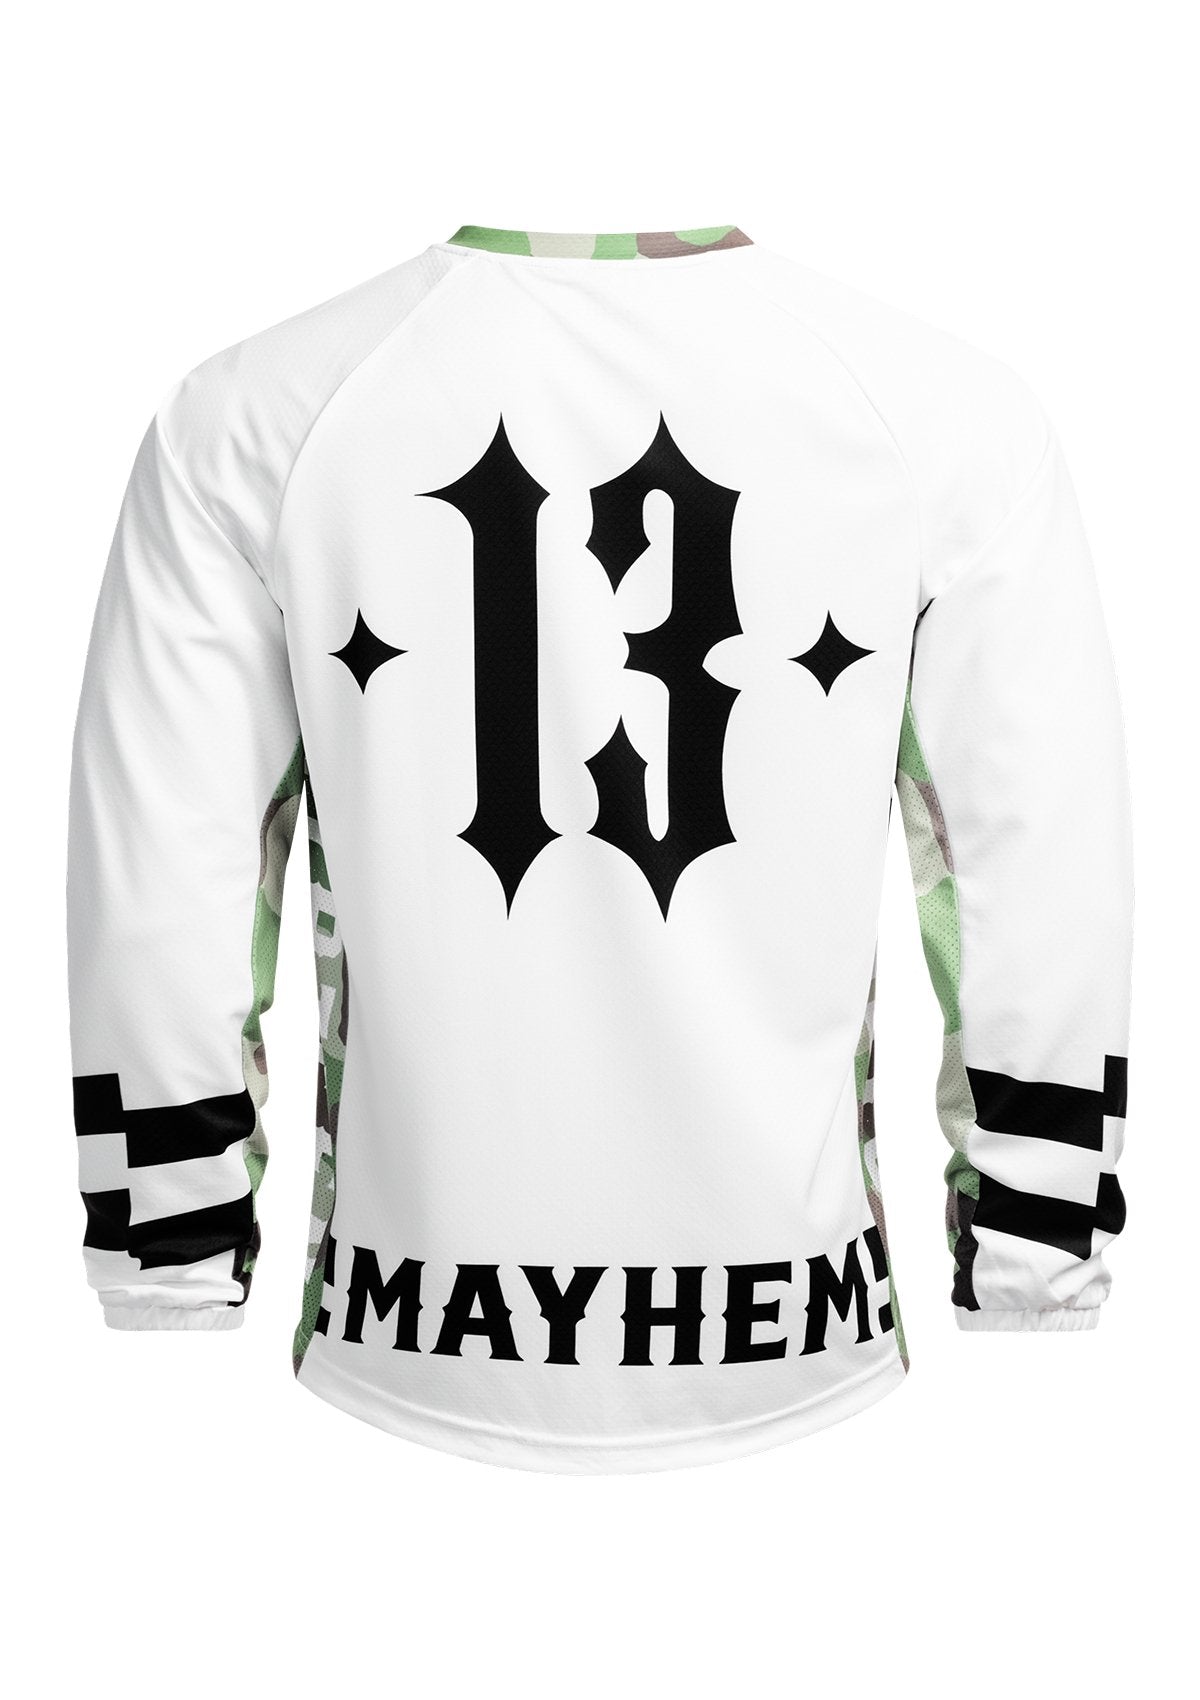 Jersey Mayhem Classic W/C - MEN OF MAYHEM - ALAIKO-EXCHANGES-MM-M-1140-LJ-JM-CL-WC - Classic - Jerseys